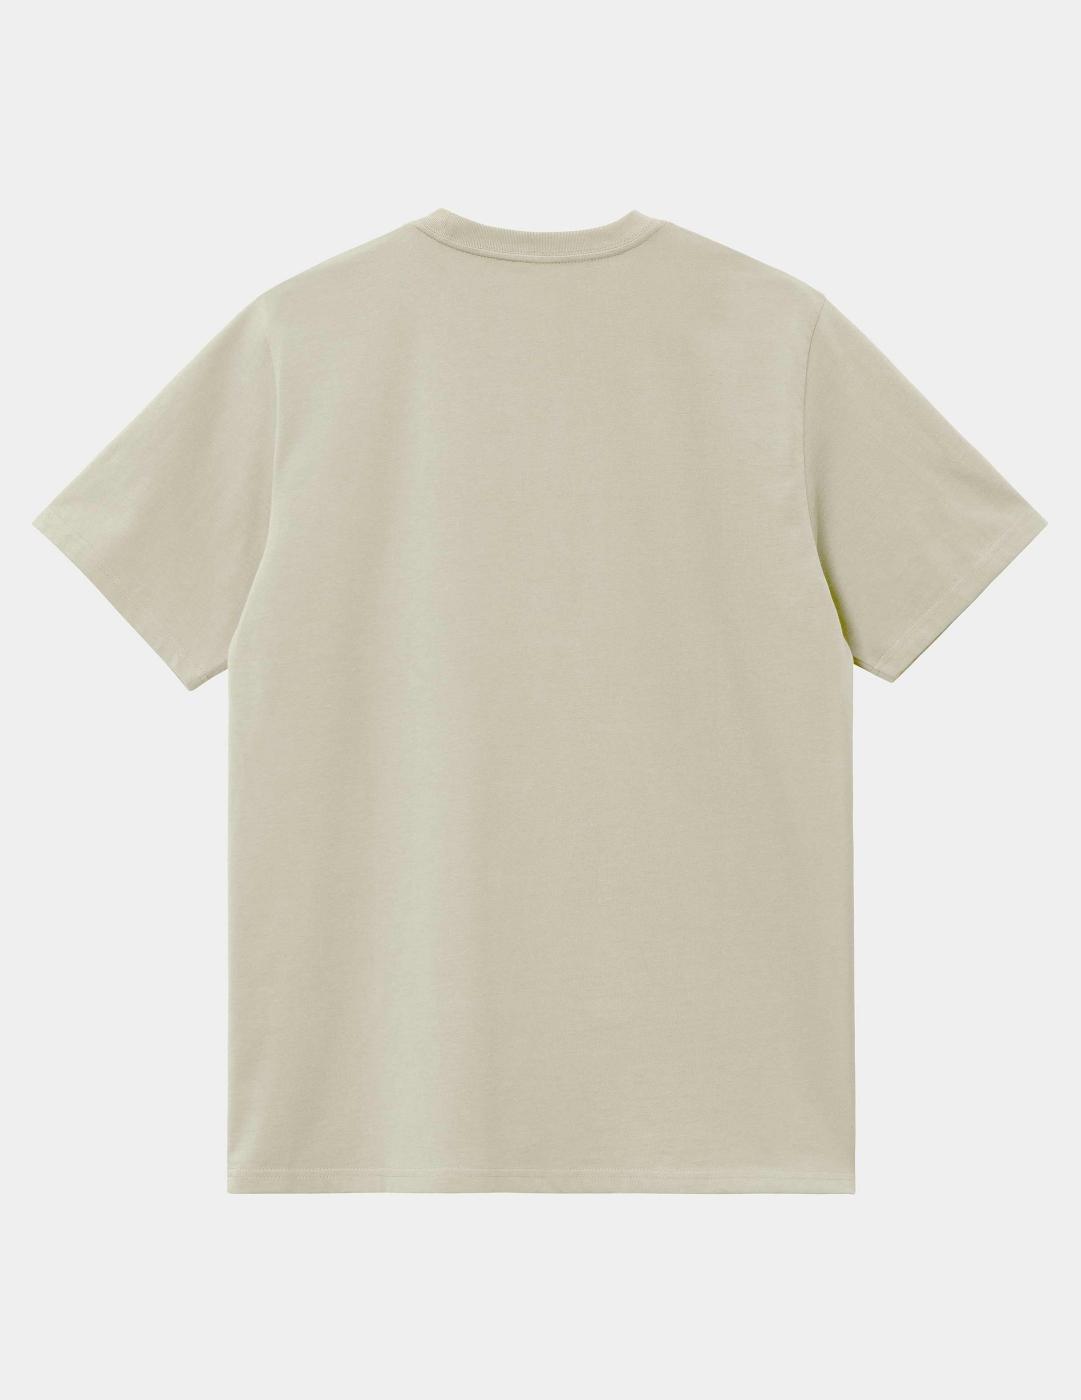 Camiseta CARHARTT SCRIPT - Beryl / Sorrent